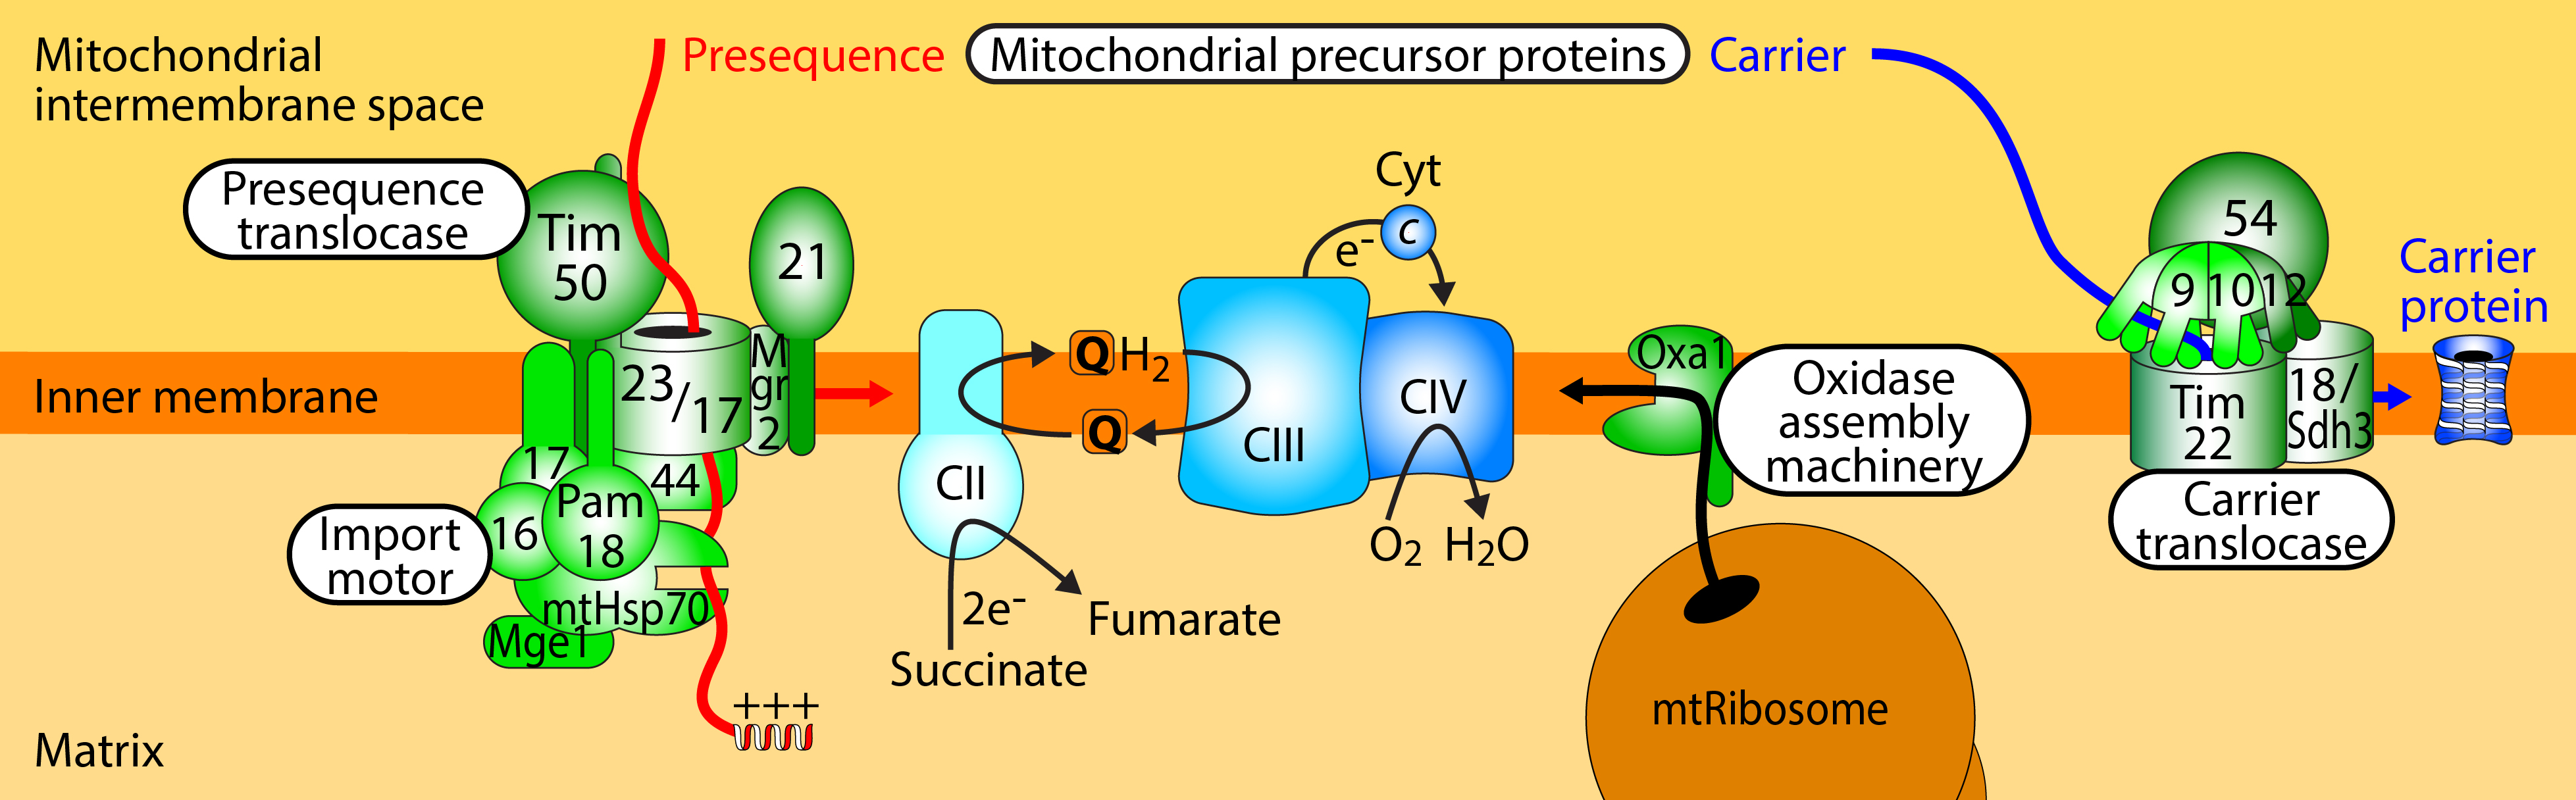 mitochondrial intermembrane space